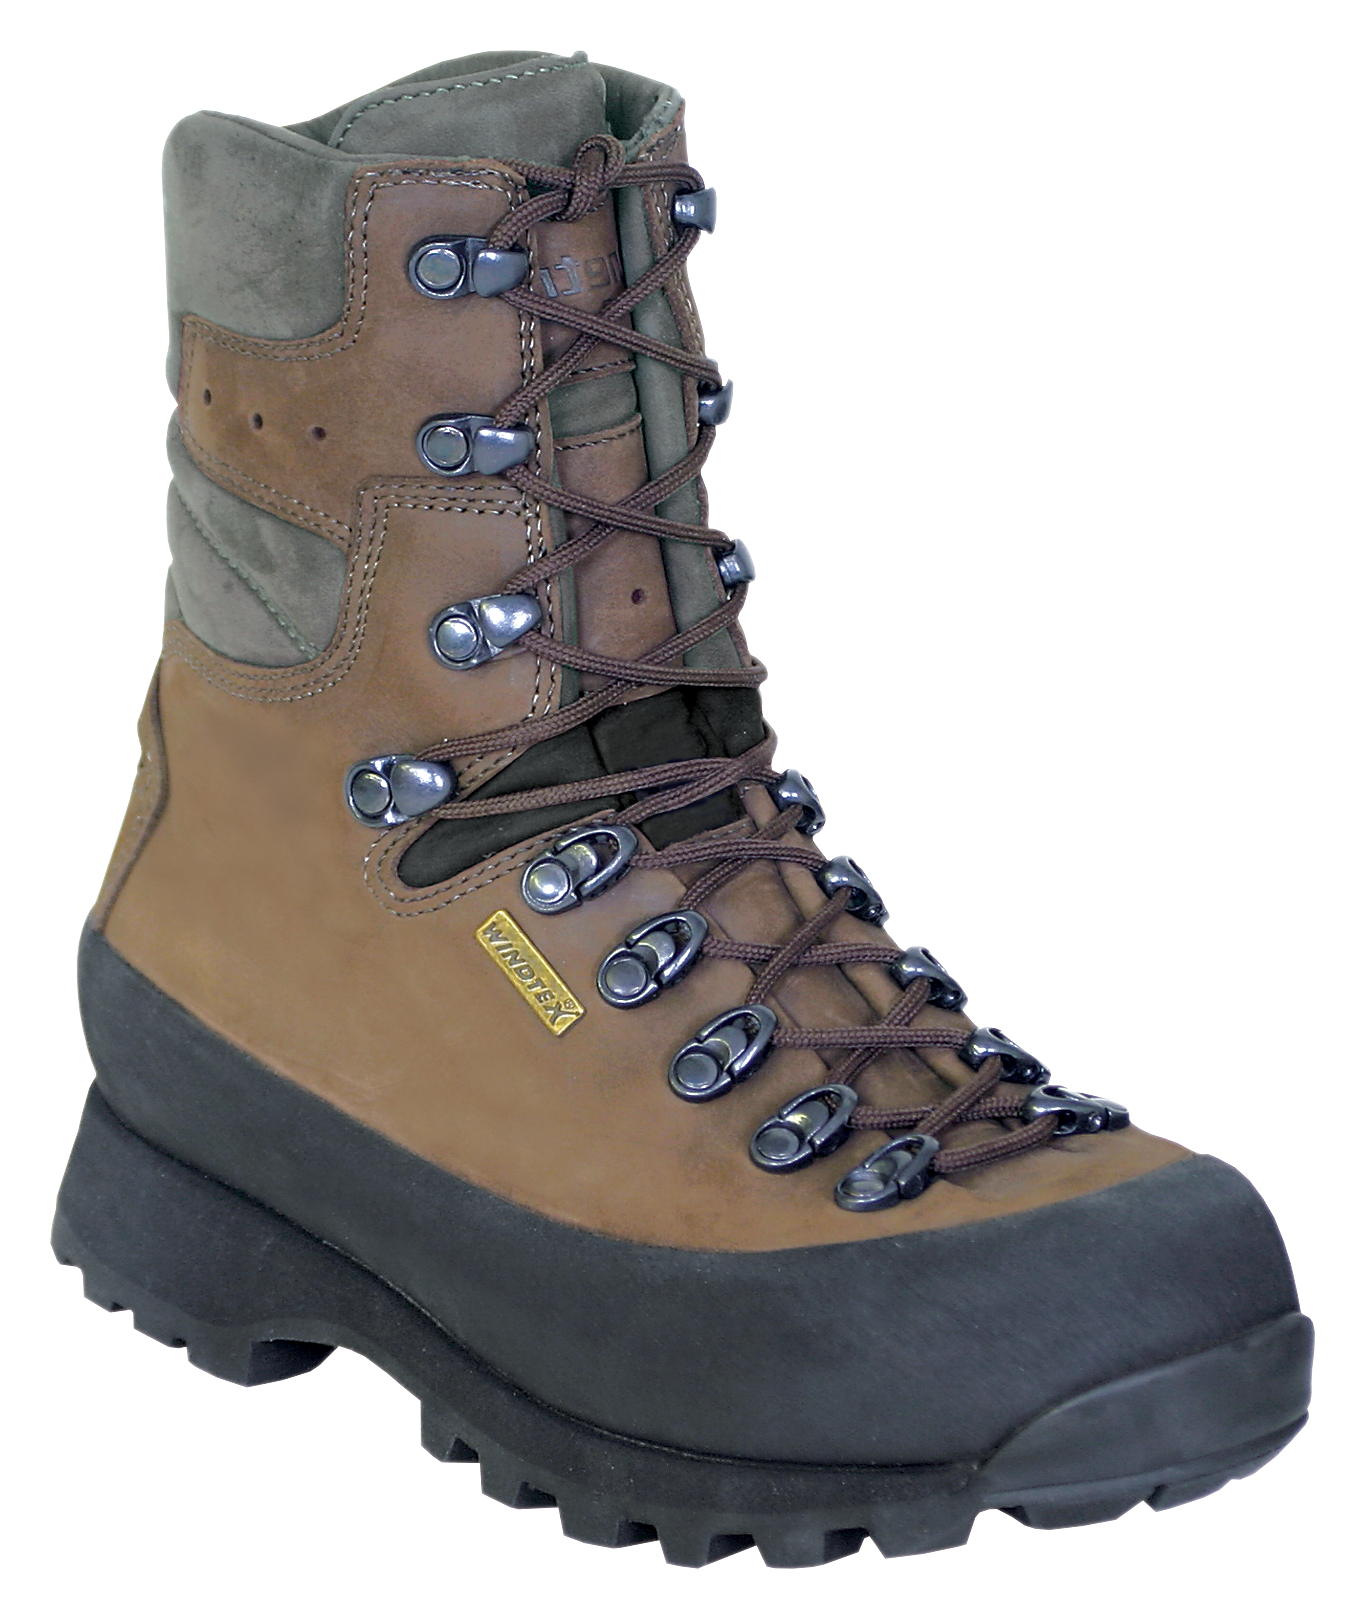 Kenetrek Mountain Extreme Waterproof Hunting Boots for Ladies -   9.5M